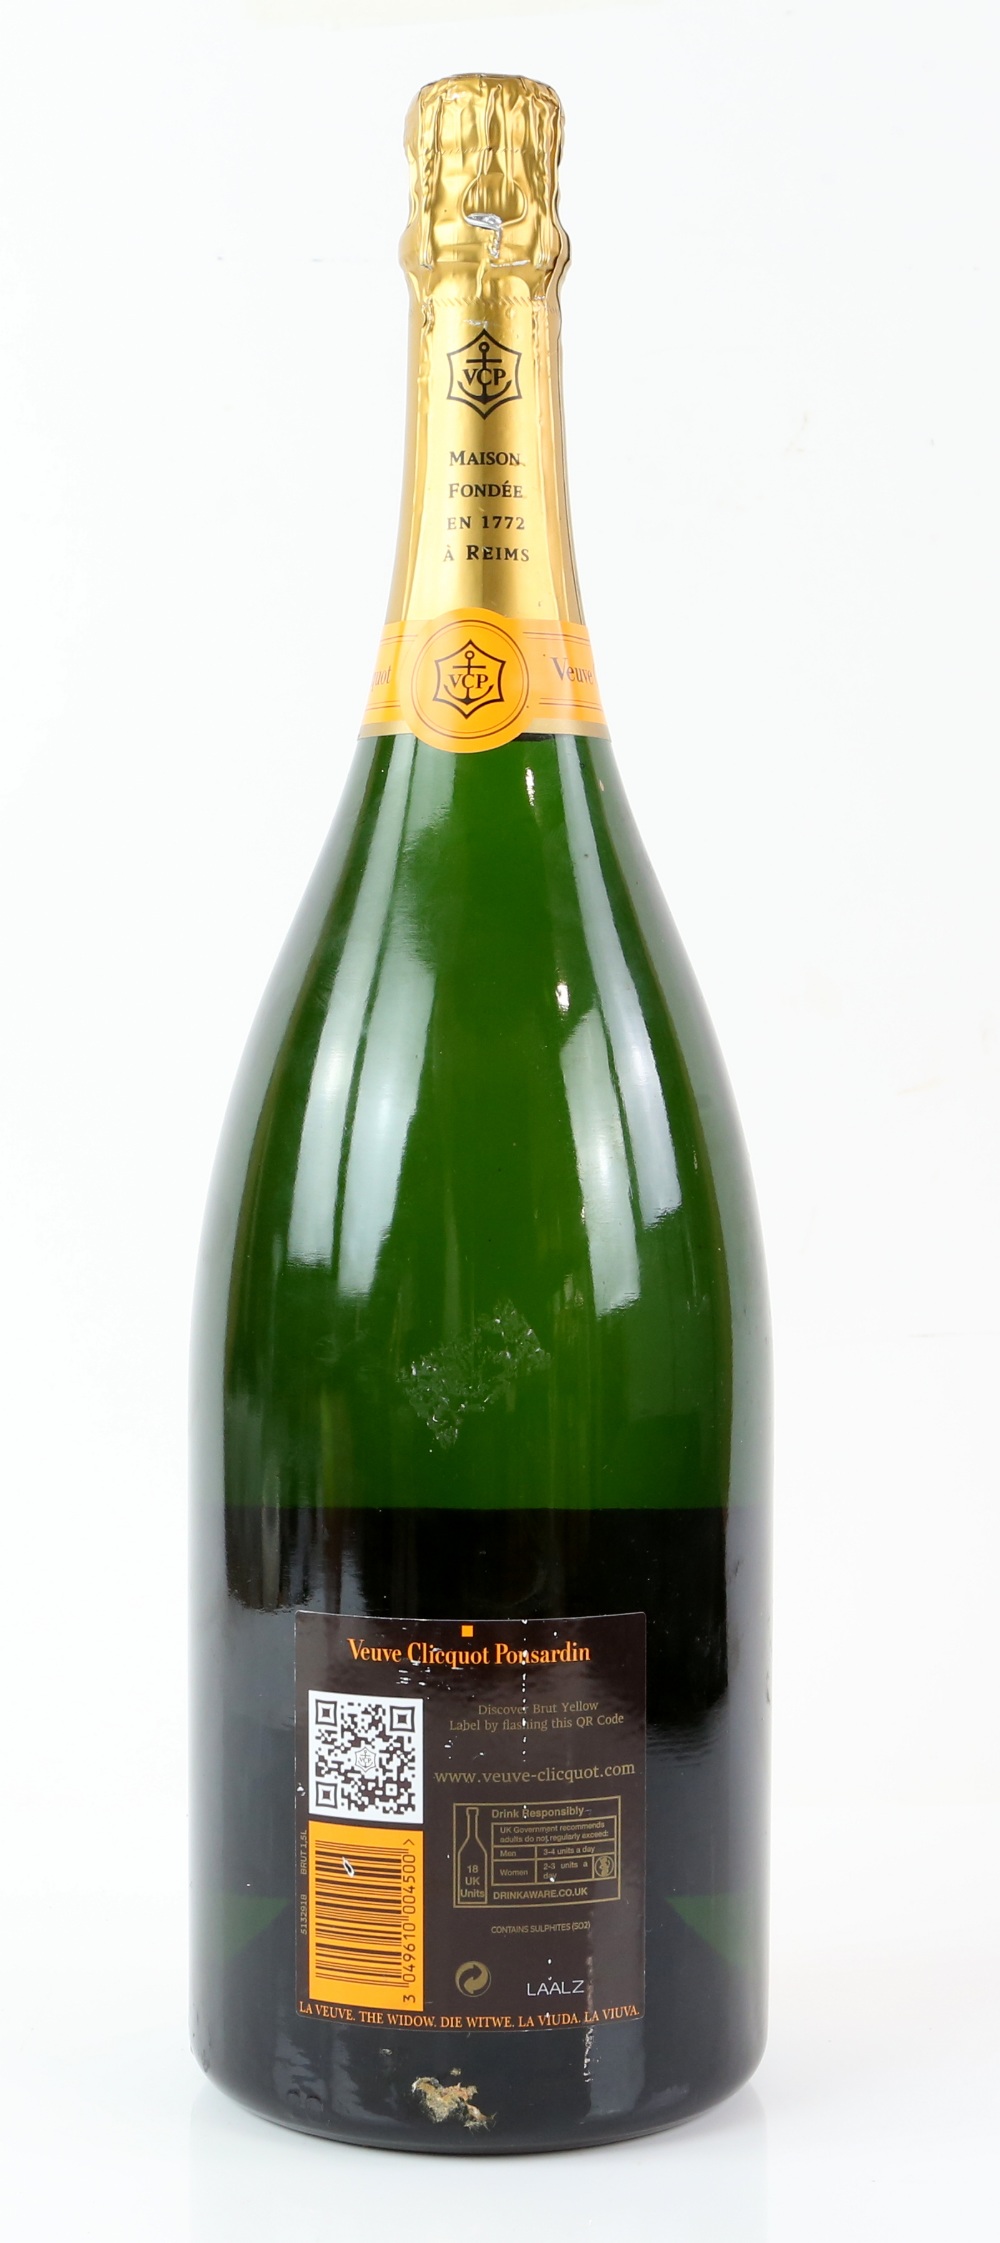 One magnum of Veuve Clicquot Ponsardin Brut Champagne - Image 2 of 3